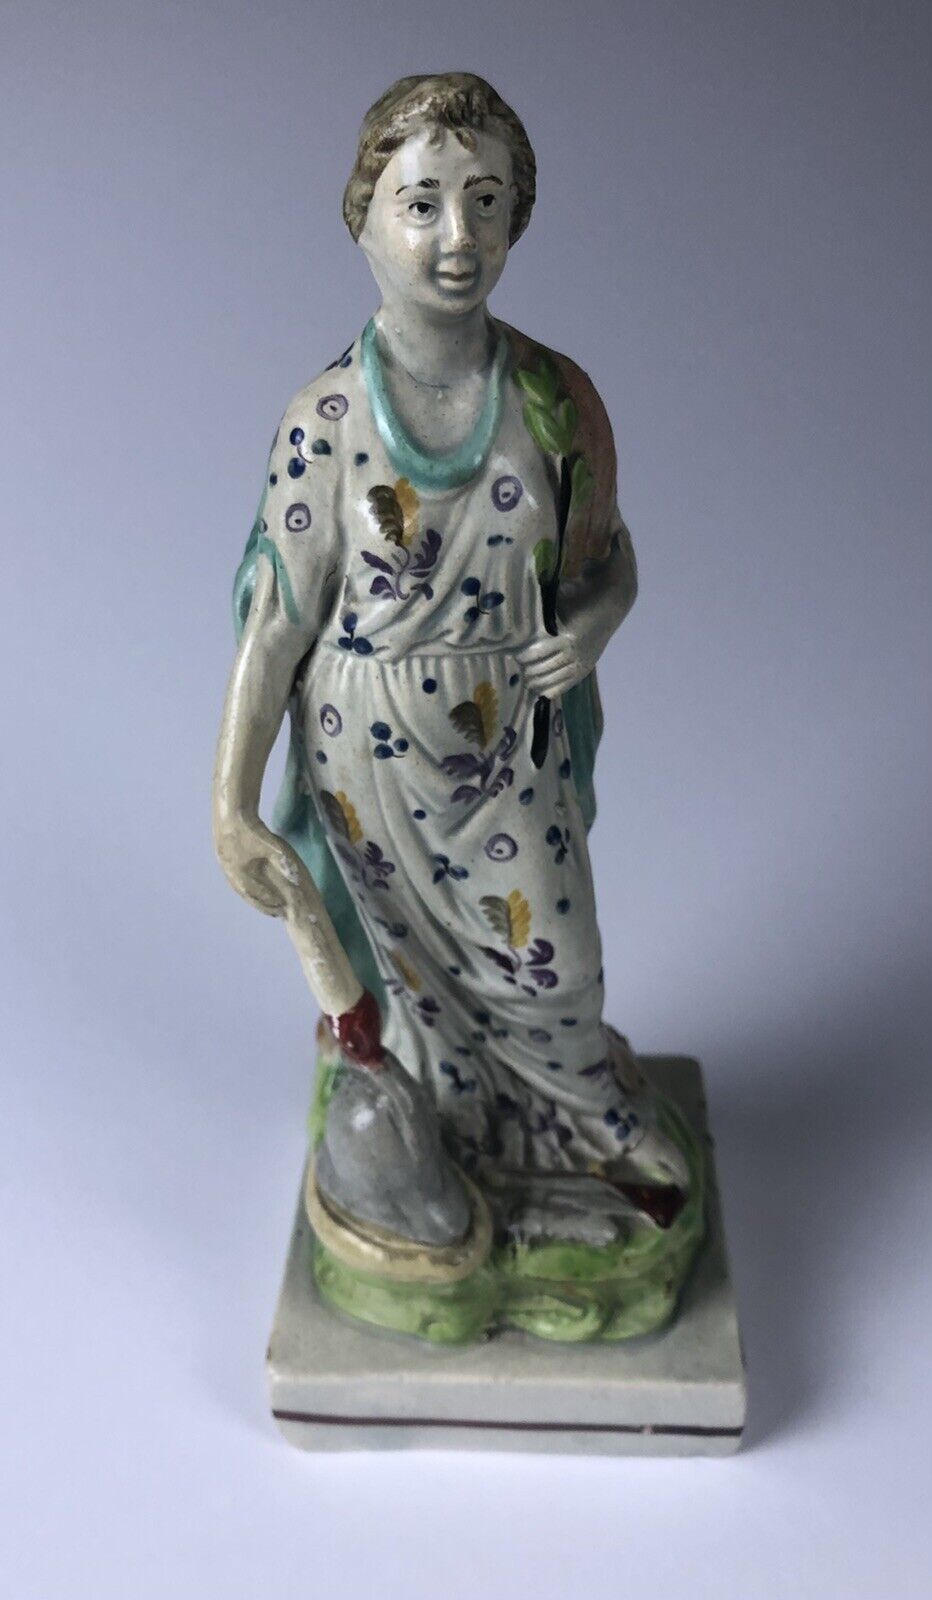 antique Staffordshire pottery, pearlware figures, Peace,  Myrna Schkolne,  